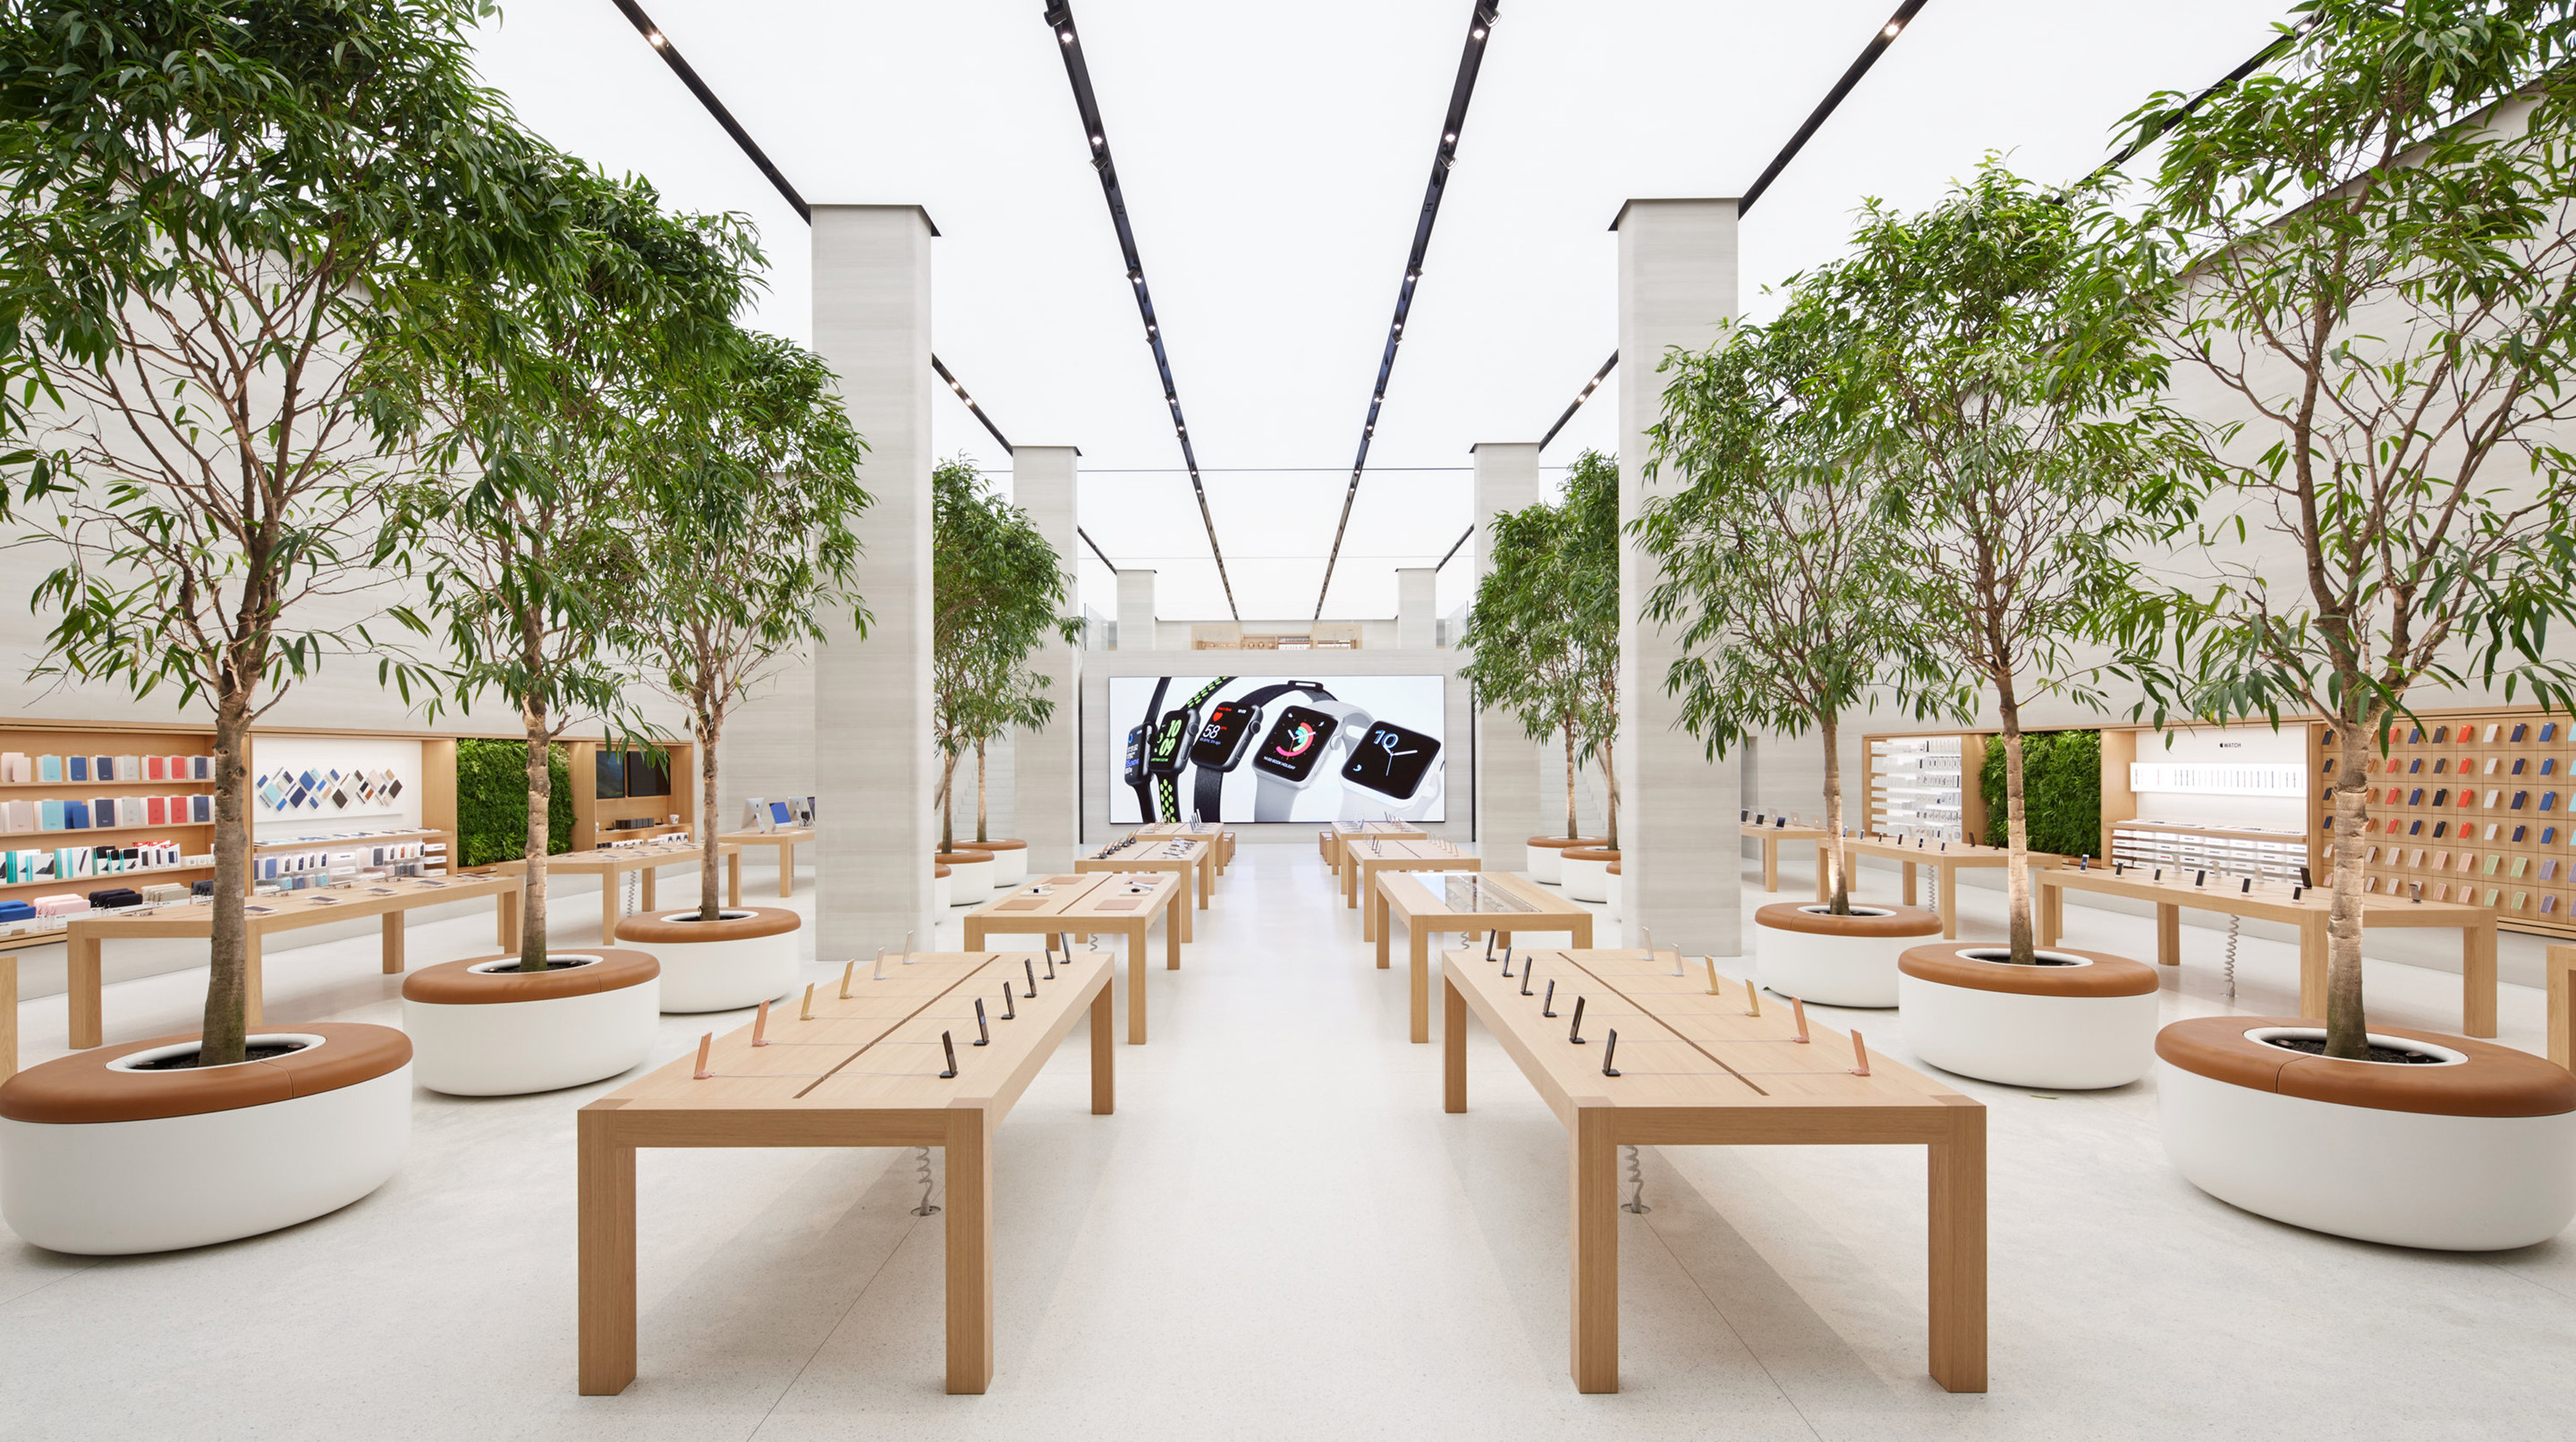 Apple center london apple macbook pro receipt